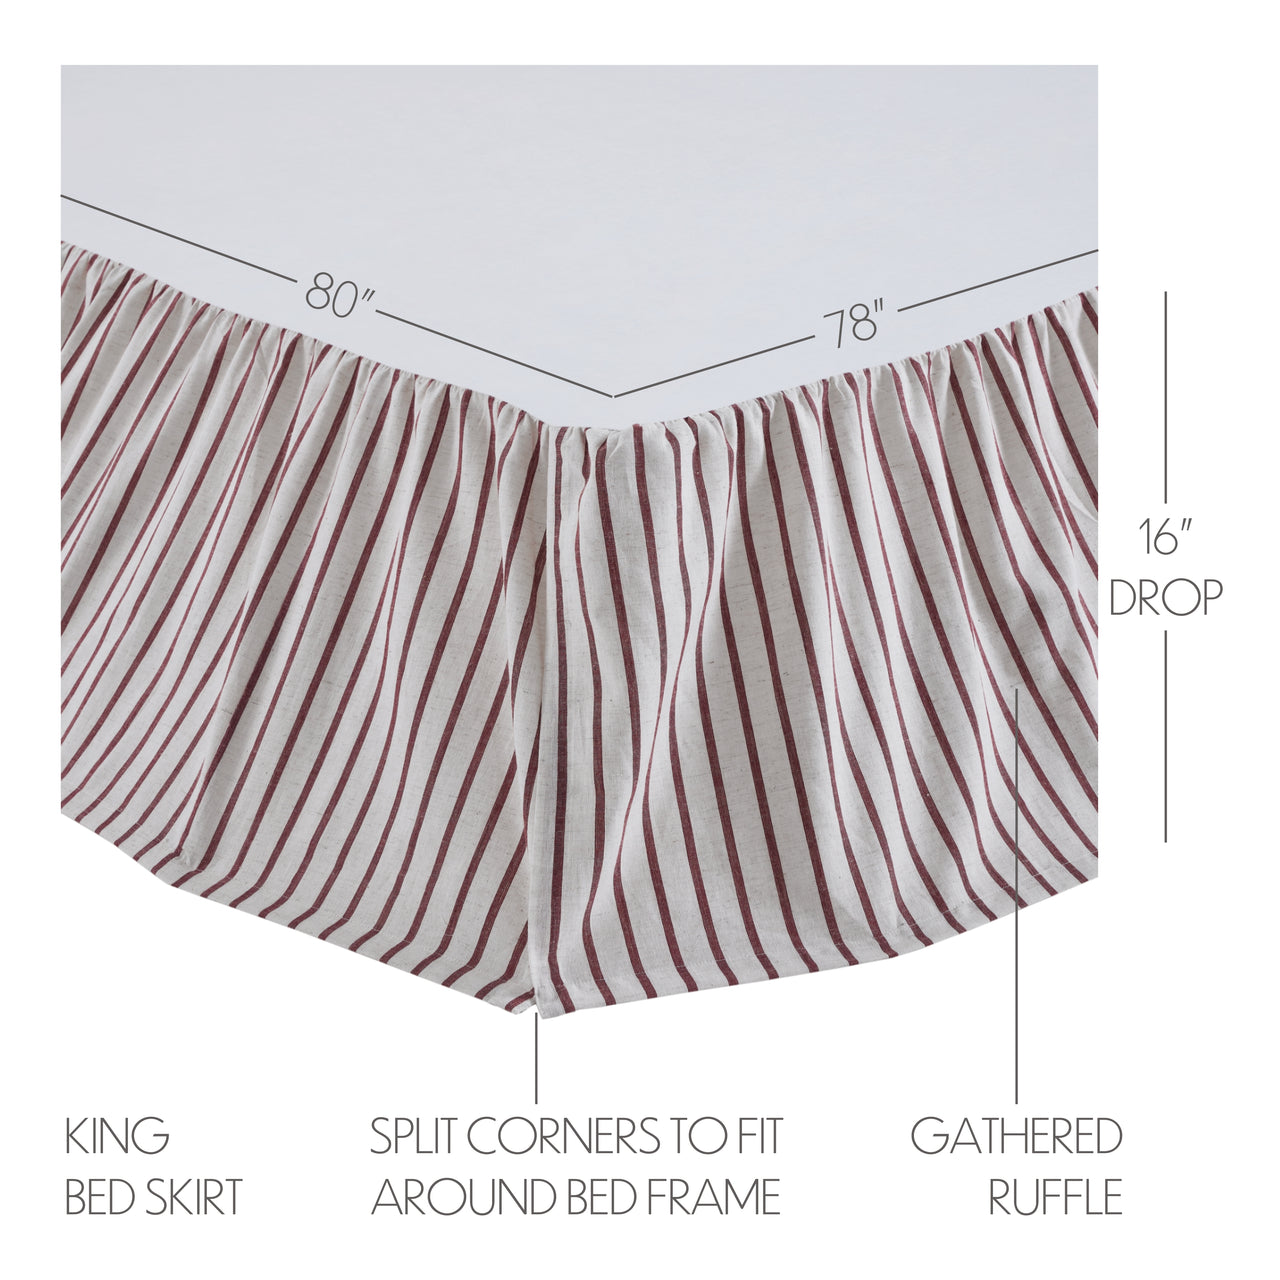 Celebration King Bed Skirt 78x80x16 VHC Brands